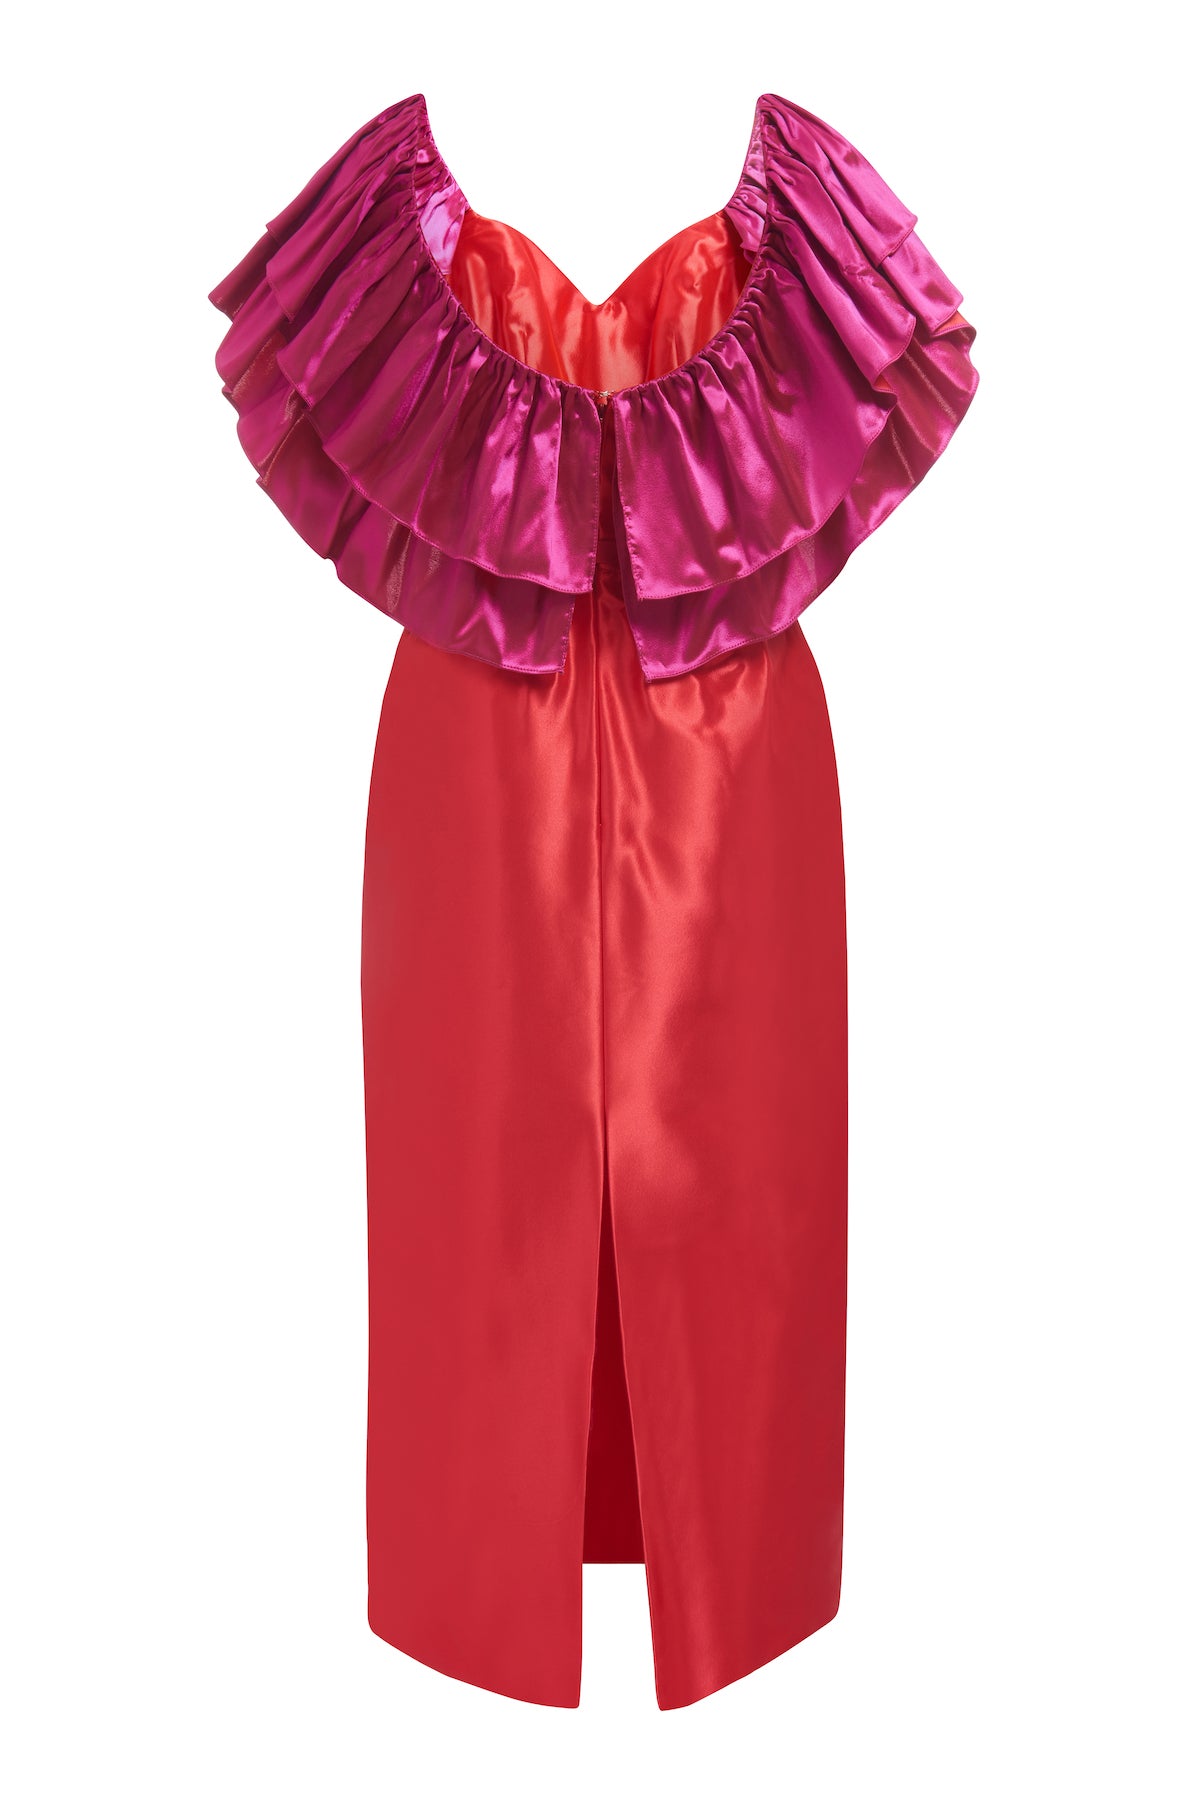 Roxie Red Midi Length Dress with Fuchsia Ruffle